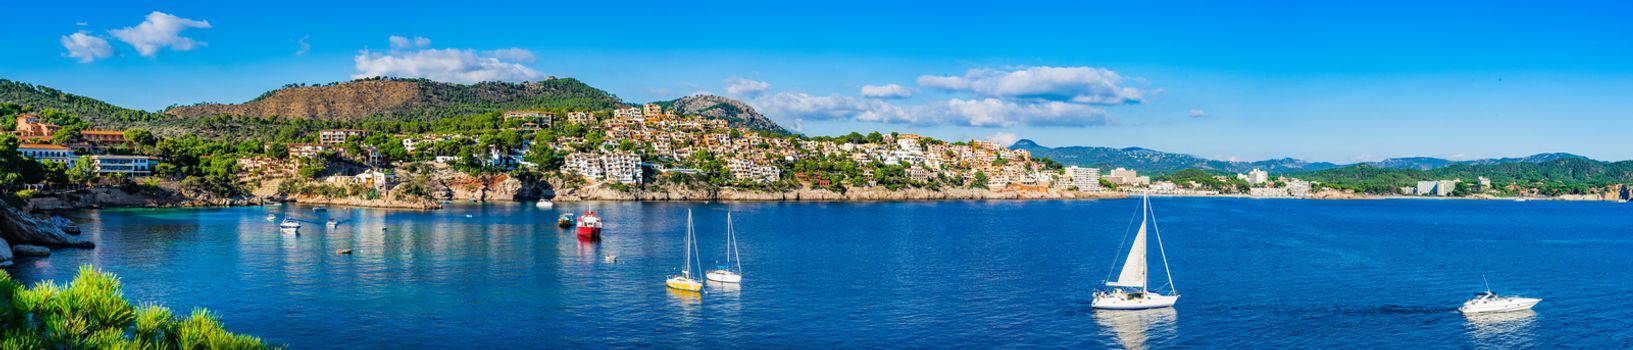 Spain Mallorca island, idyllic coastline panorama view of Cala Fornells bay beach, Mediterranean Sea